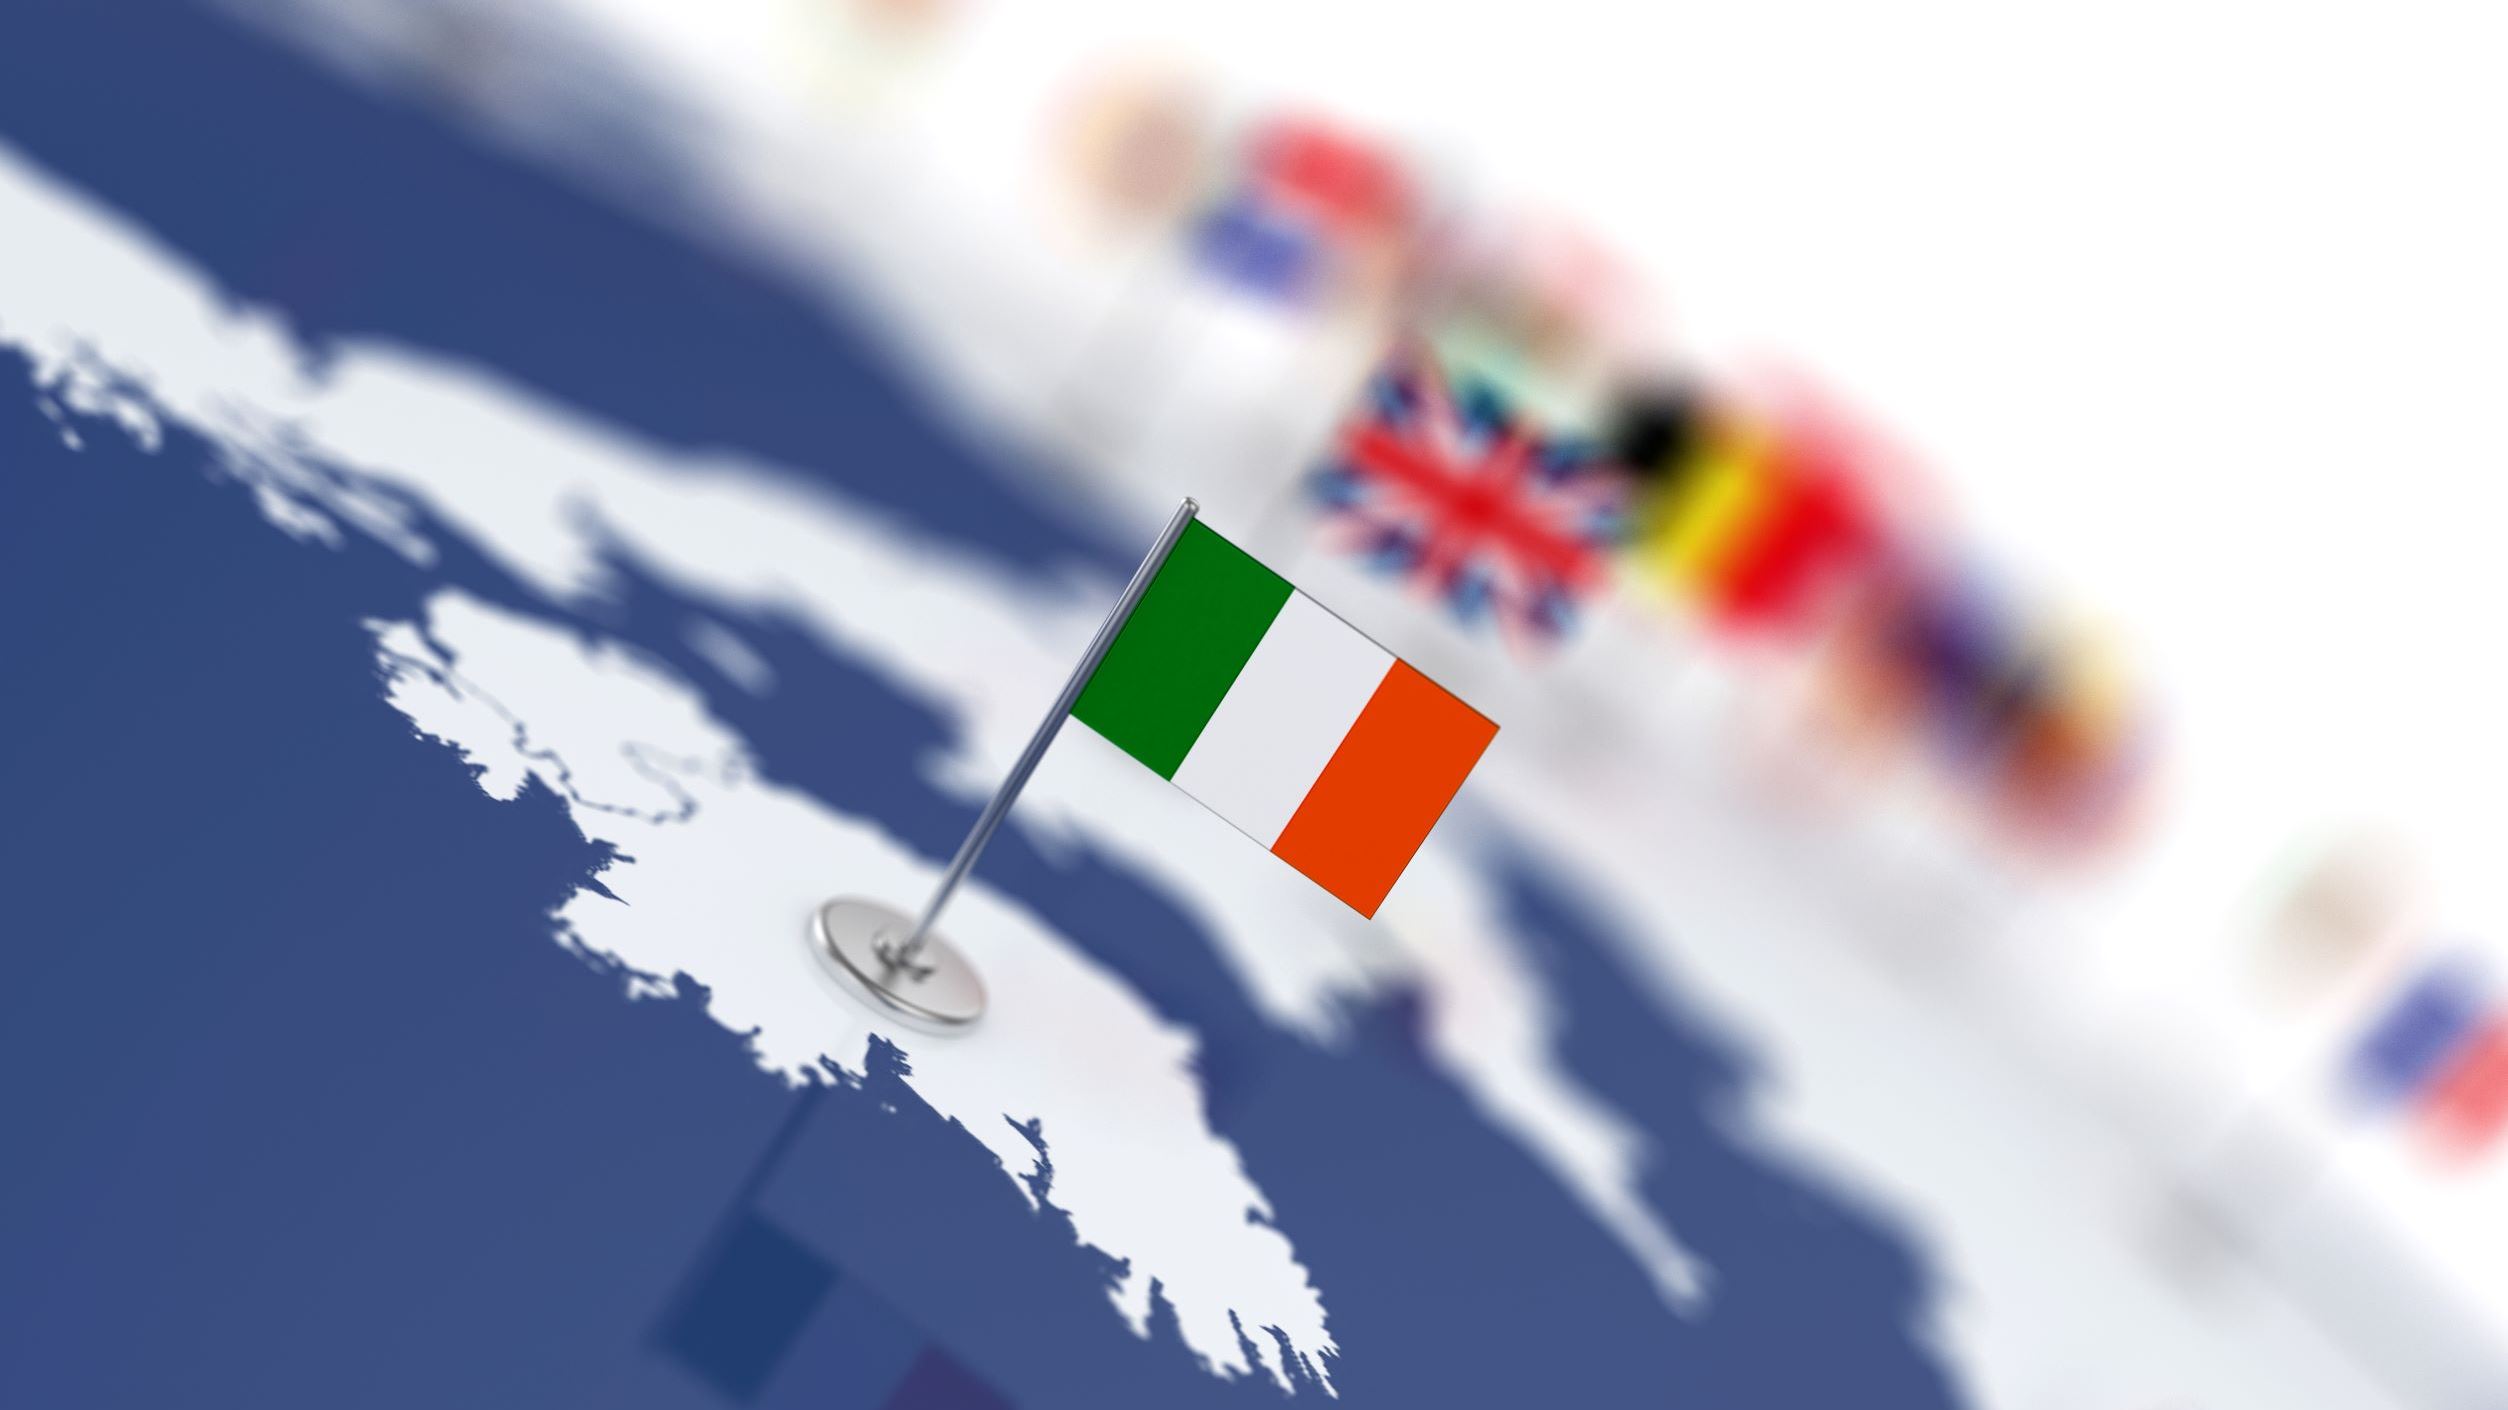 Irish flag on a map of the world